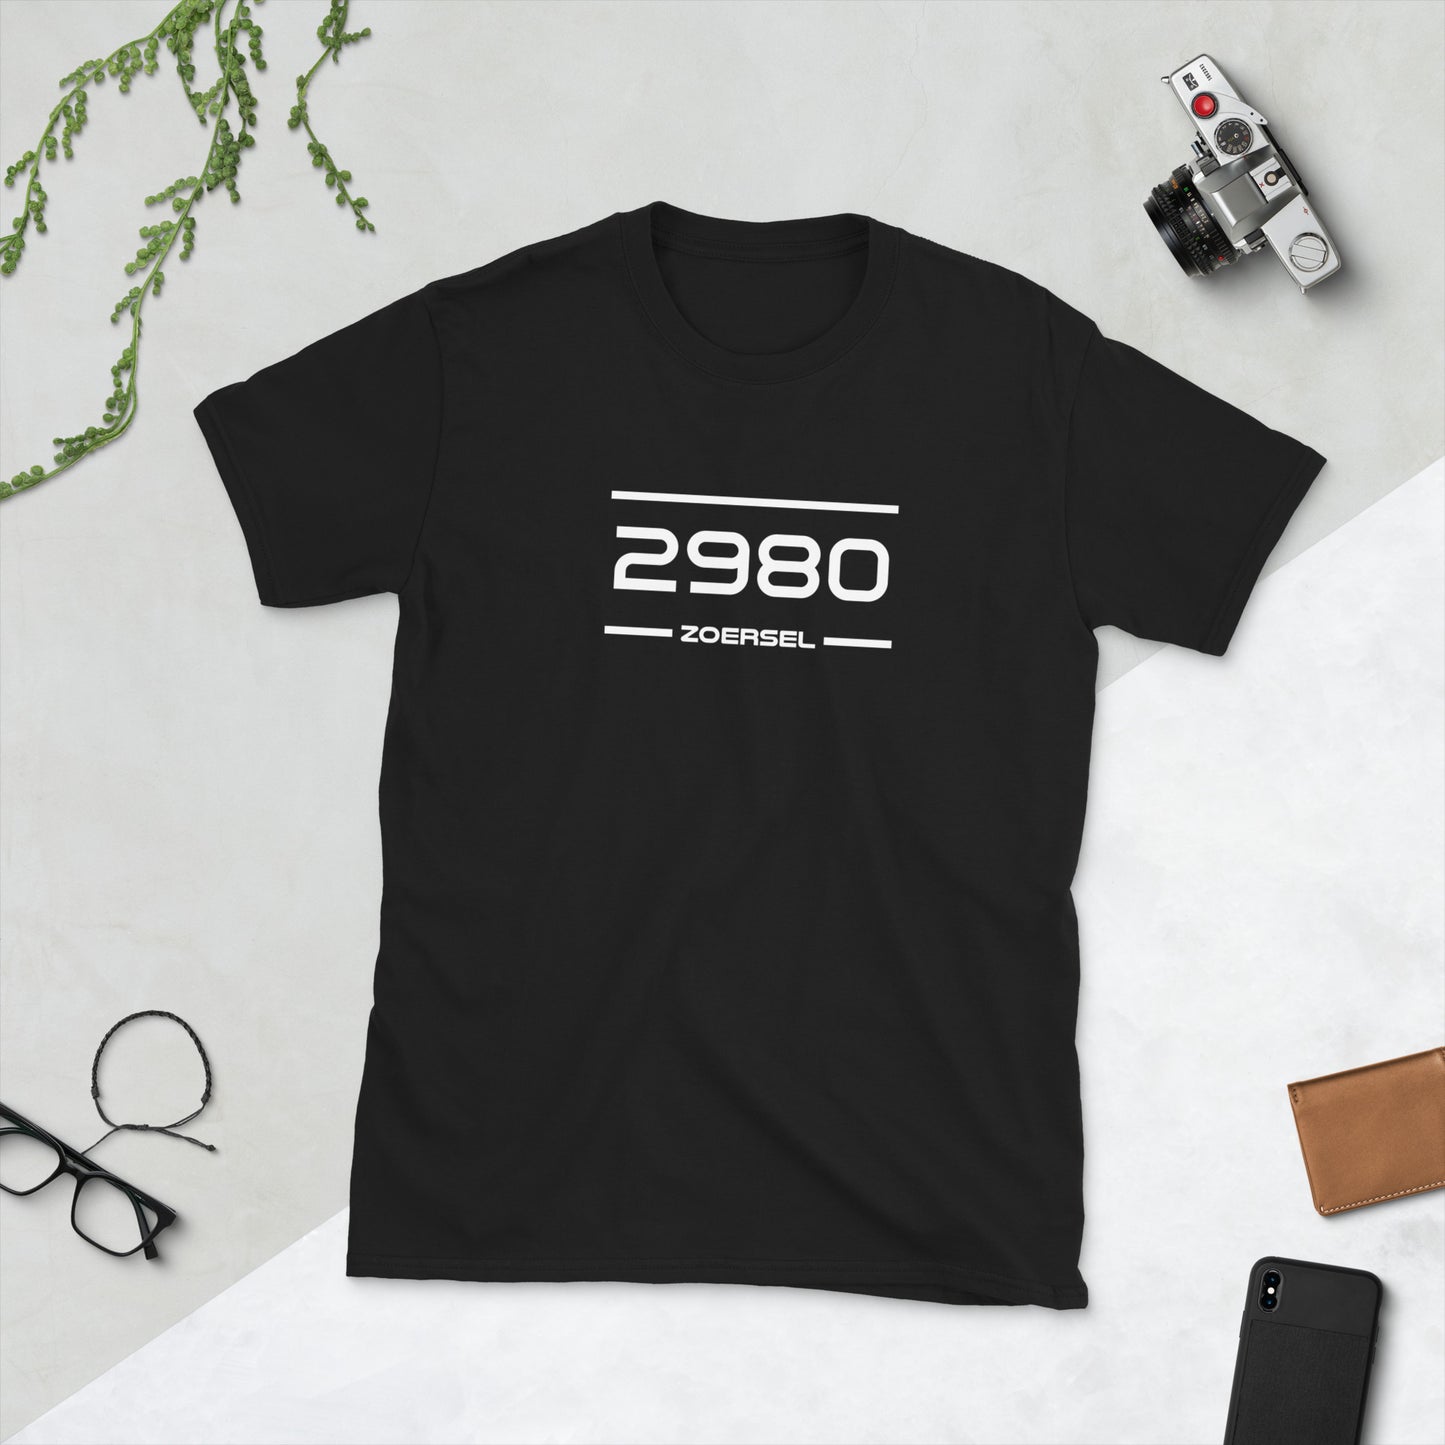 Tshirt - 2980 - Zoersel